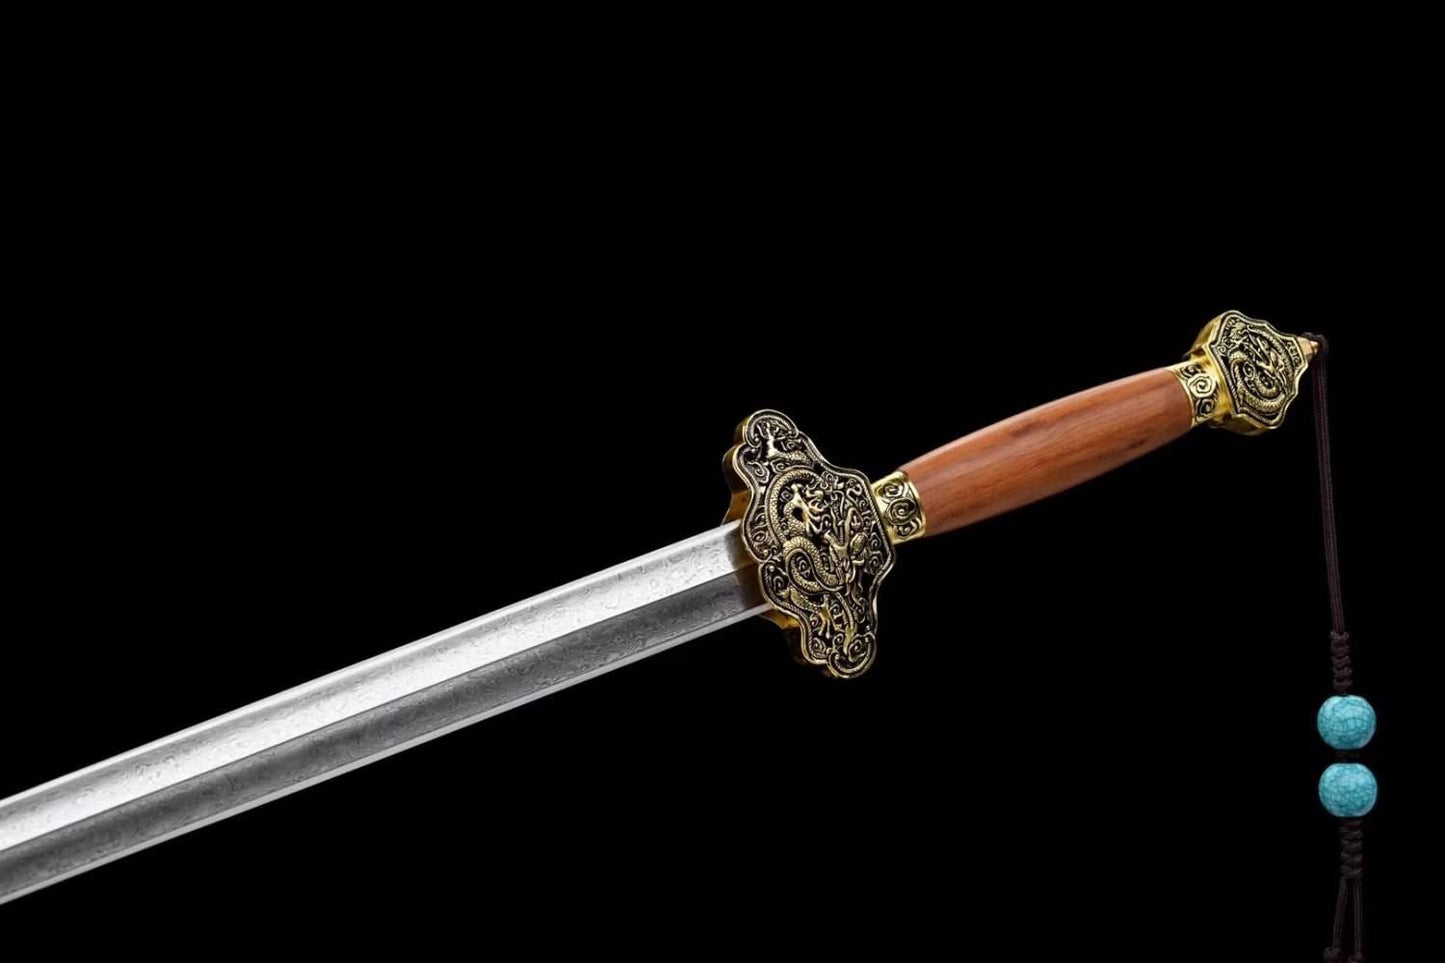 Nine Dragons Sword,Damascus Steel Blades,Golden Yellow Alloy Fittings